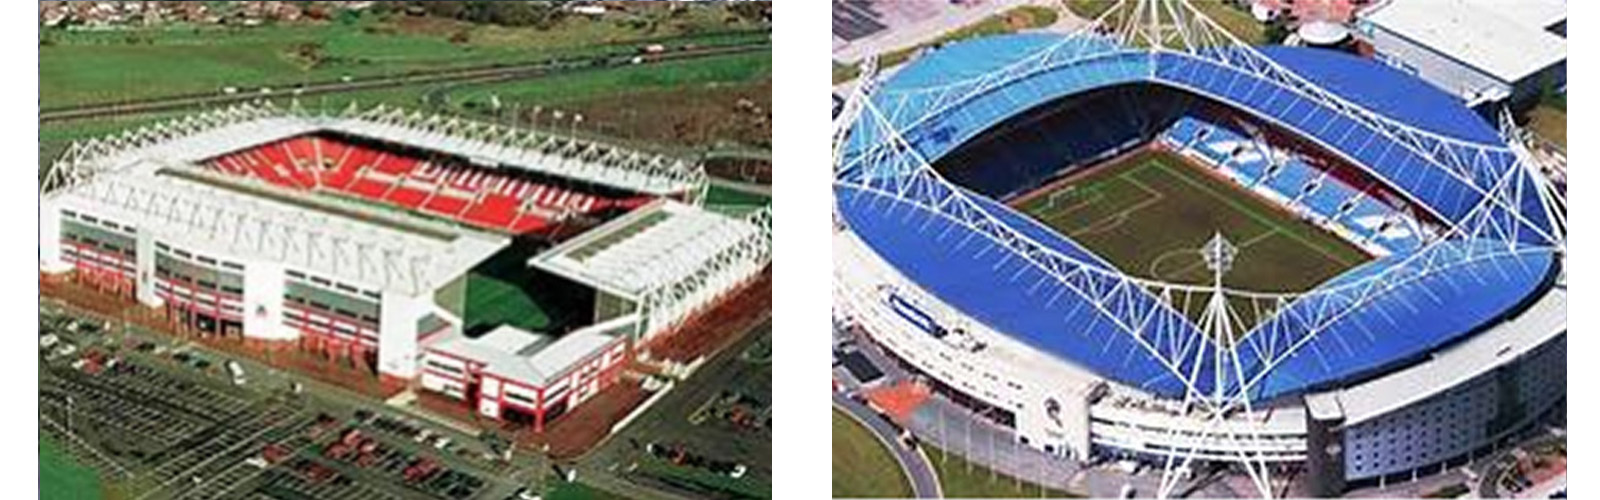 Bet365 Stadium, Stoke City 1997 ; University of Bolton Stadium, Bolton Wanderers 1997